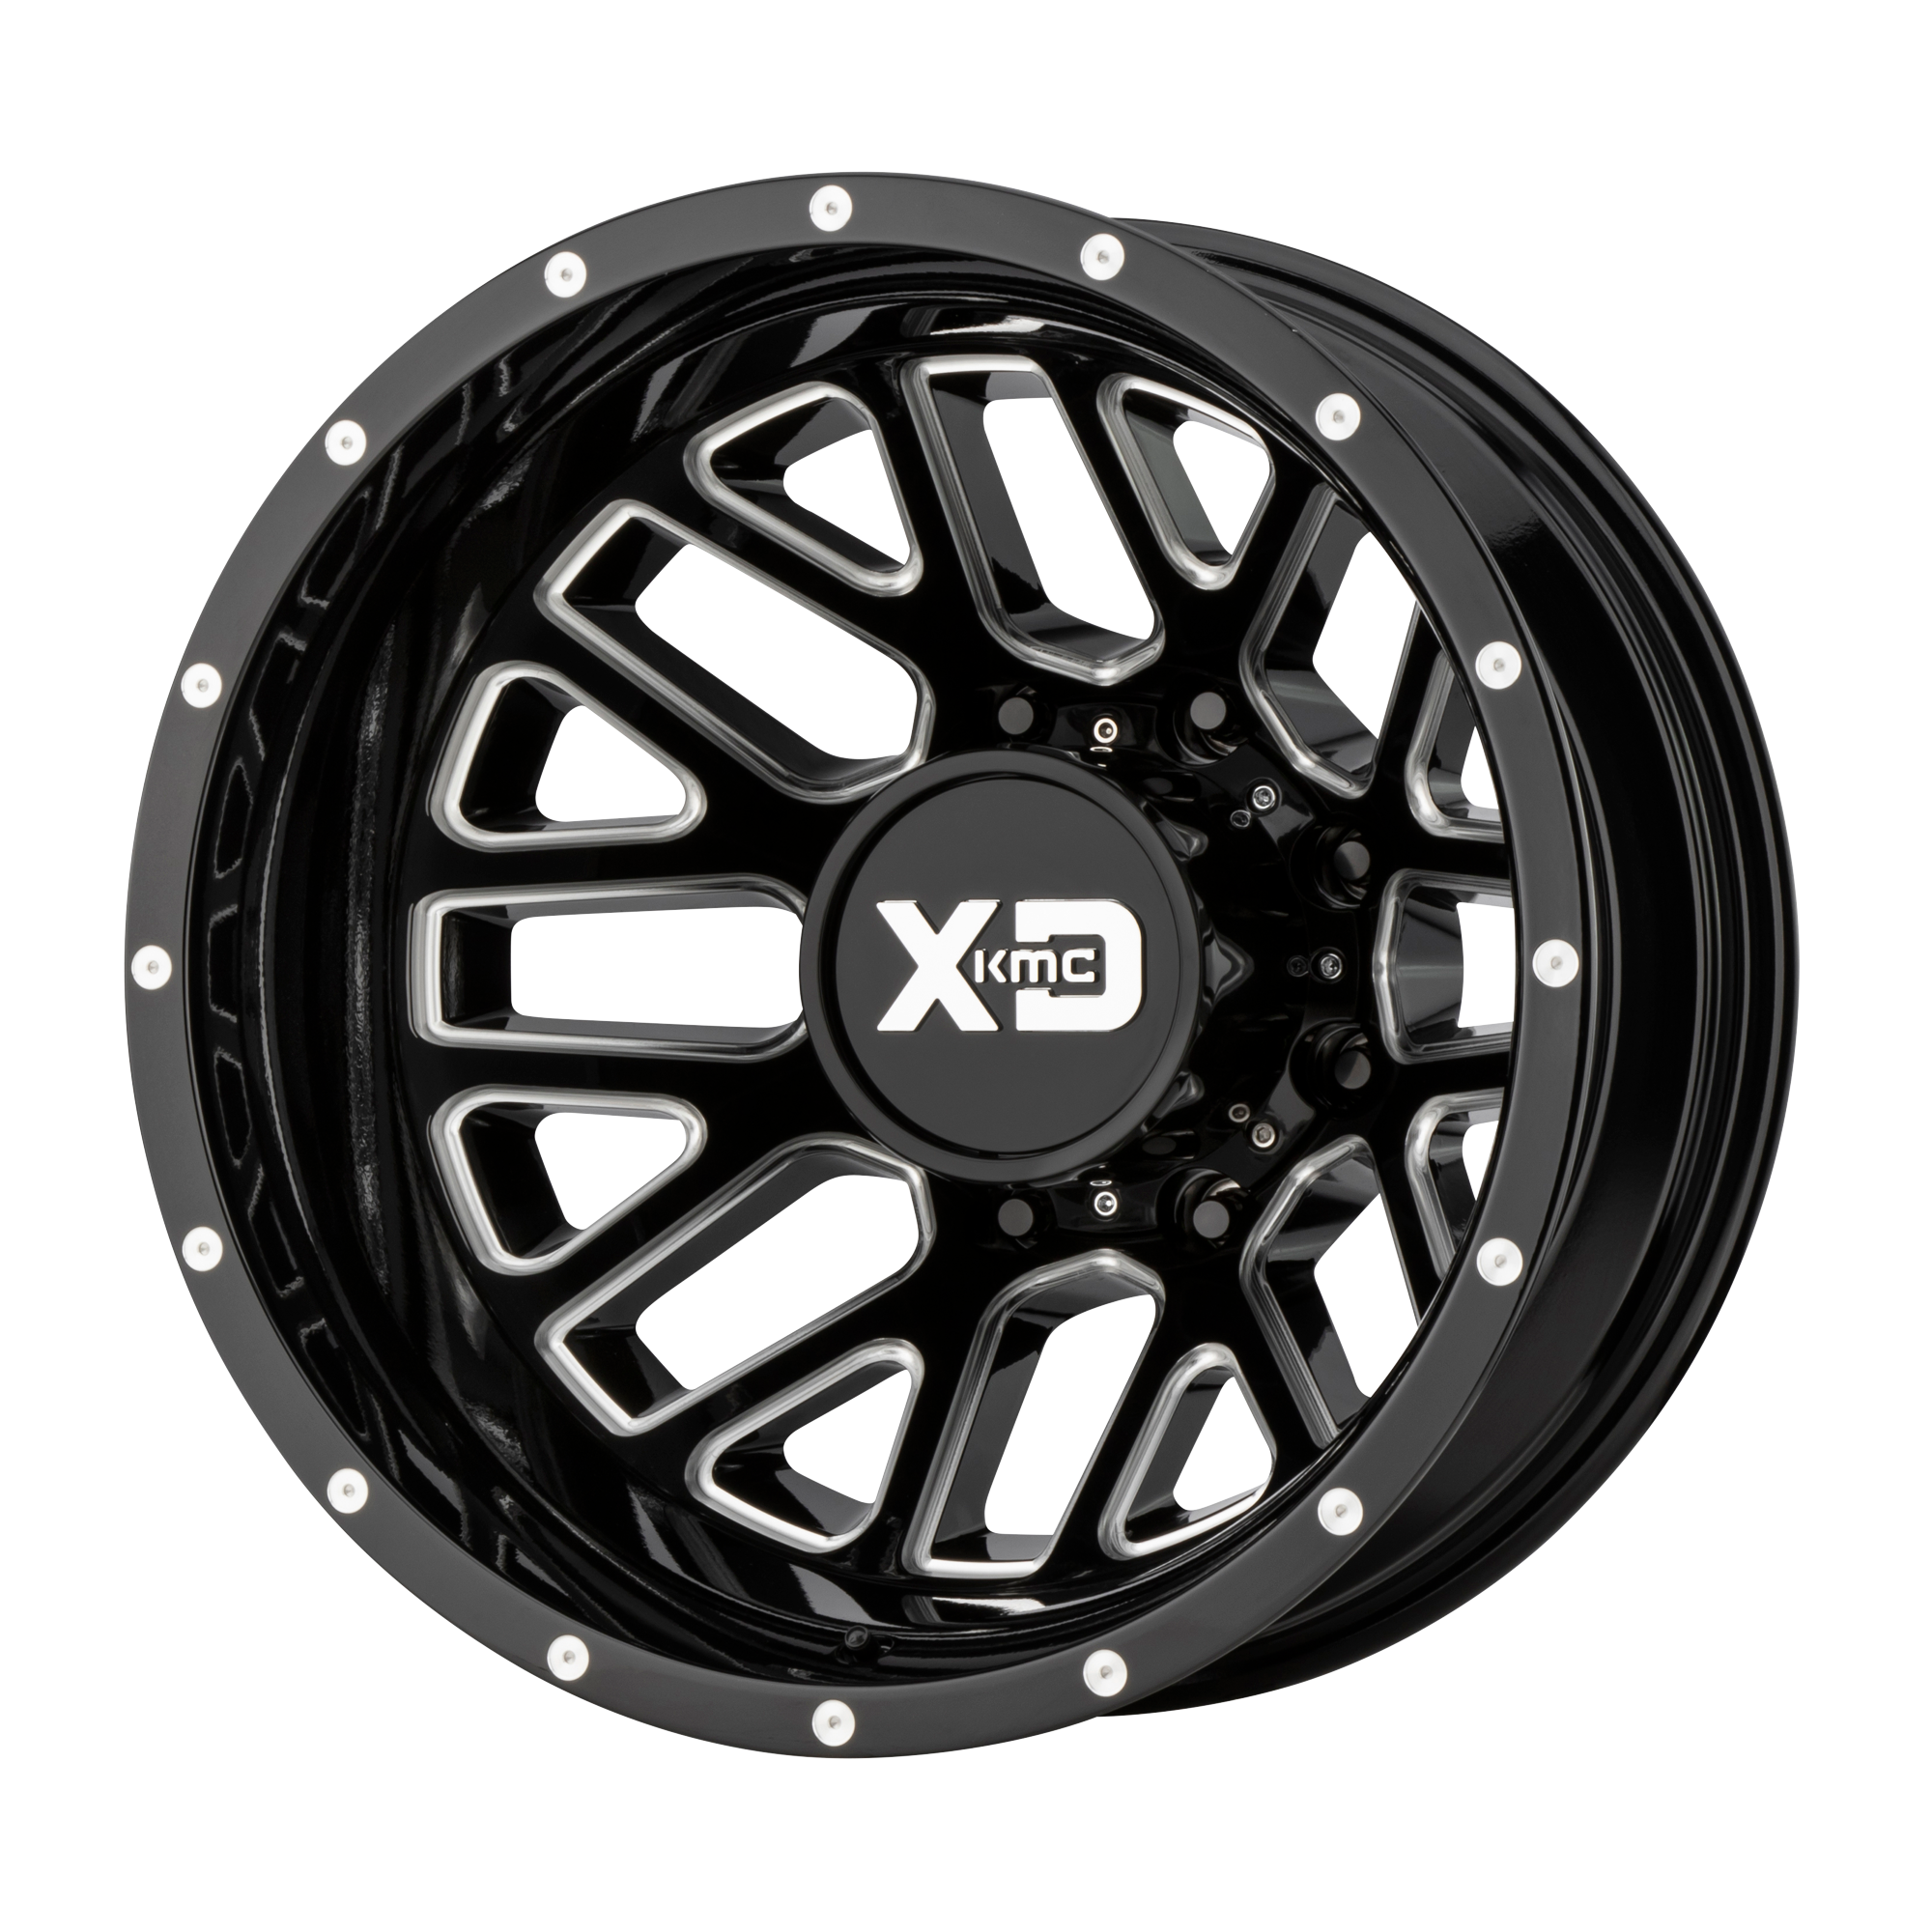 XD Series XD843 GRENADE DUALLY Gloss Black Milled - Rear